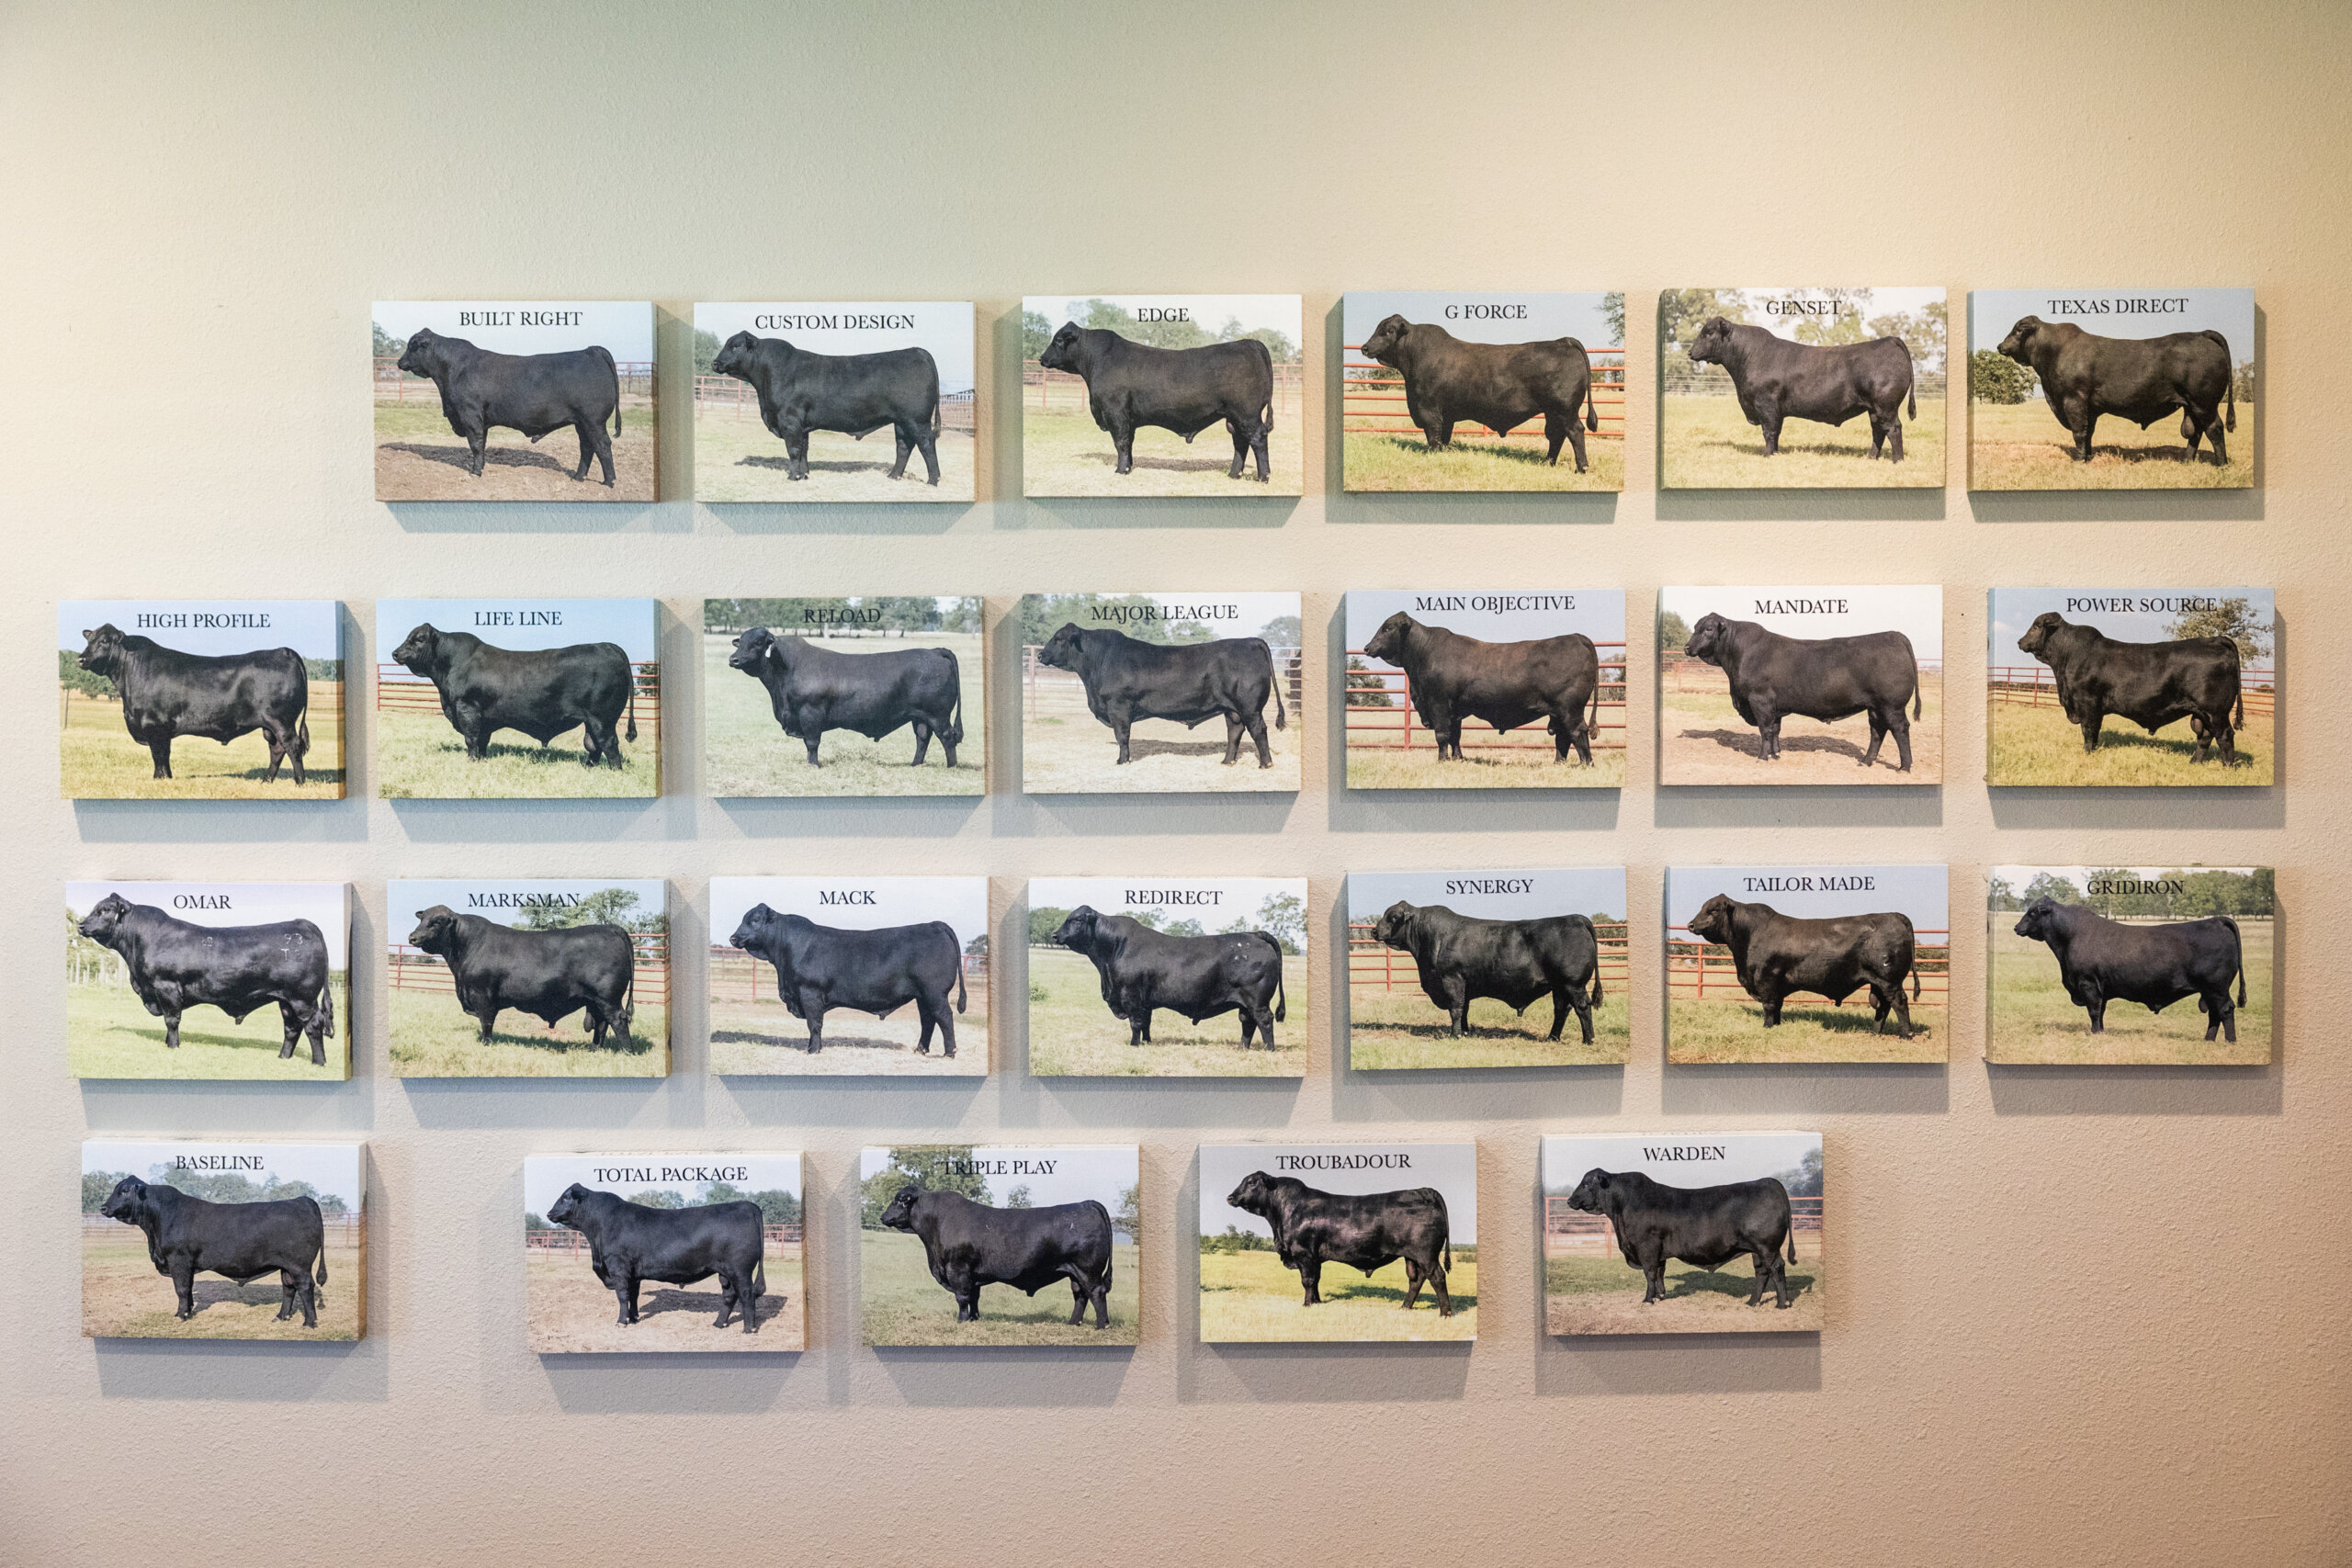 A wall of images showcasing Santa Rosa's stud bulls